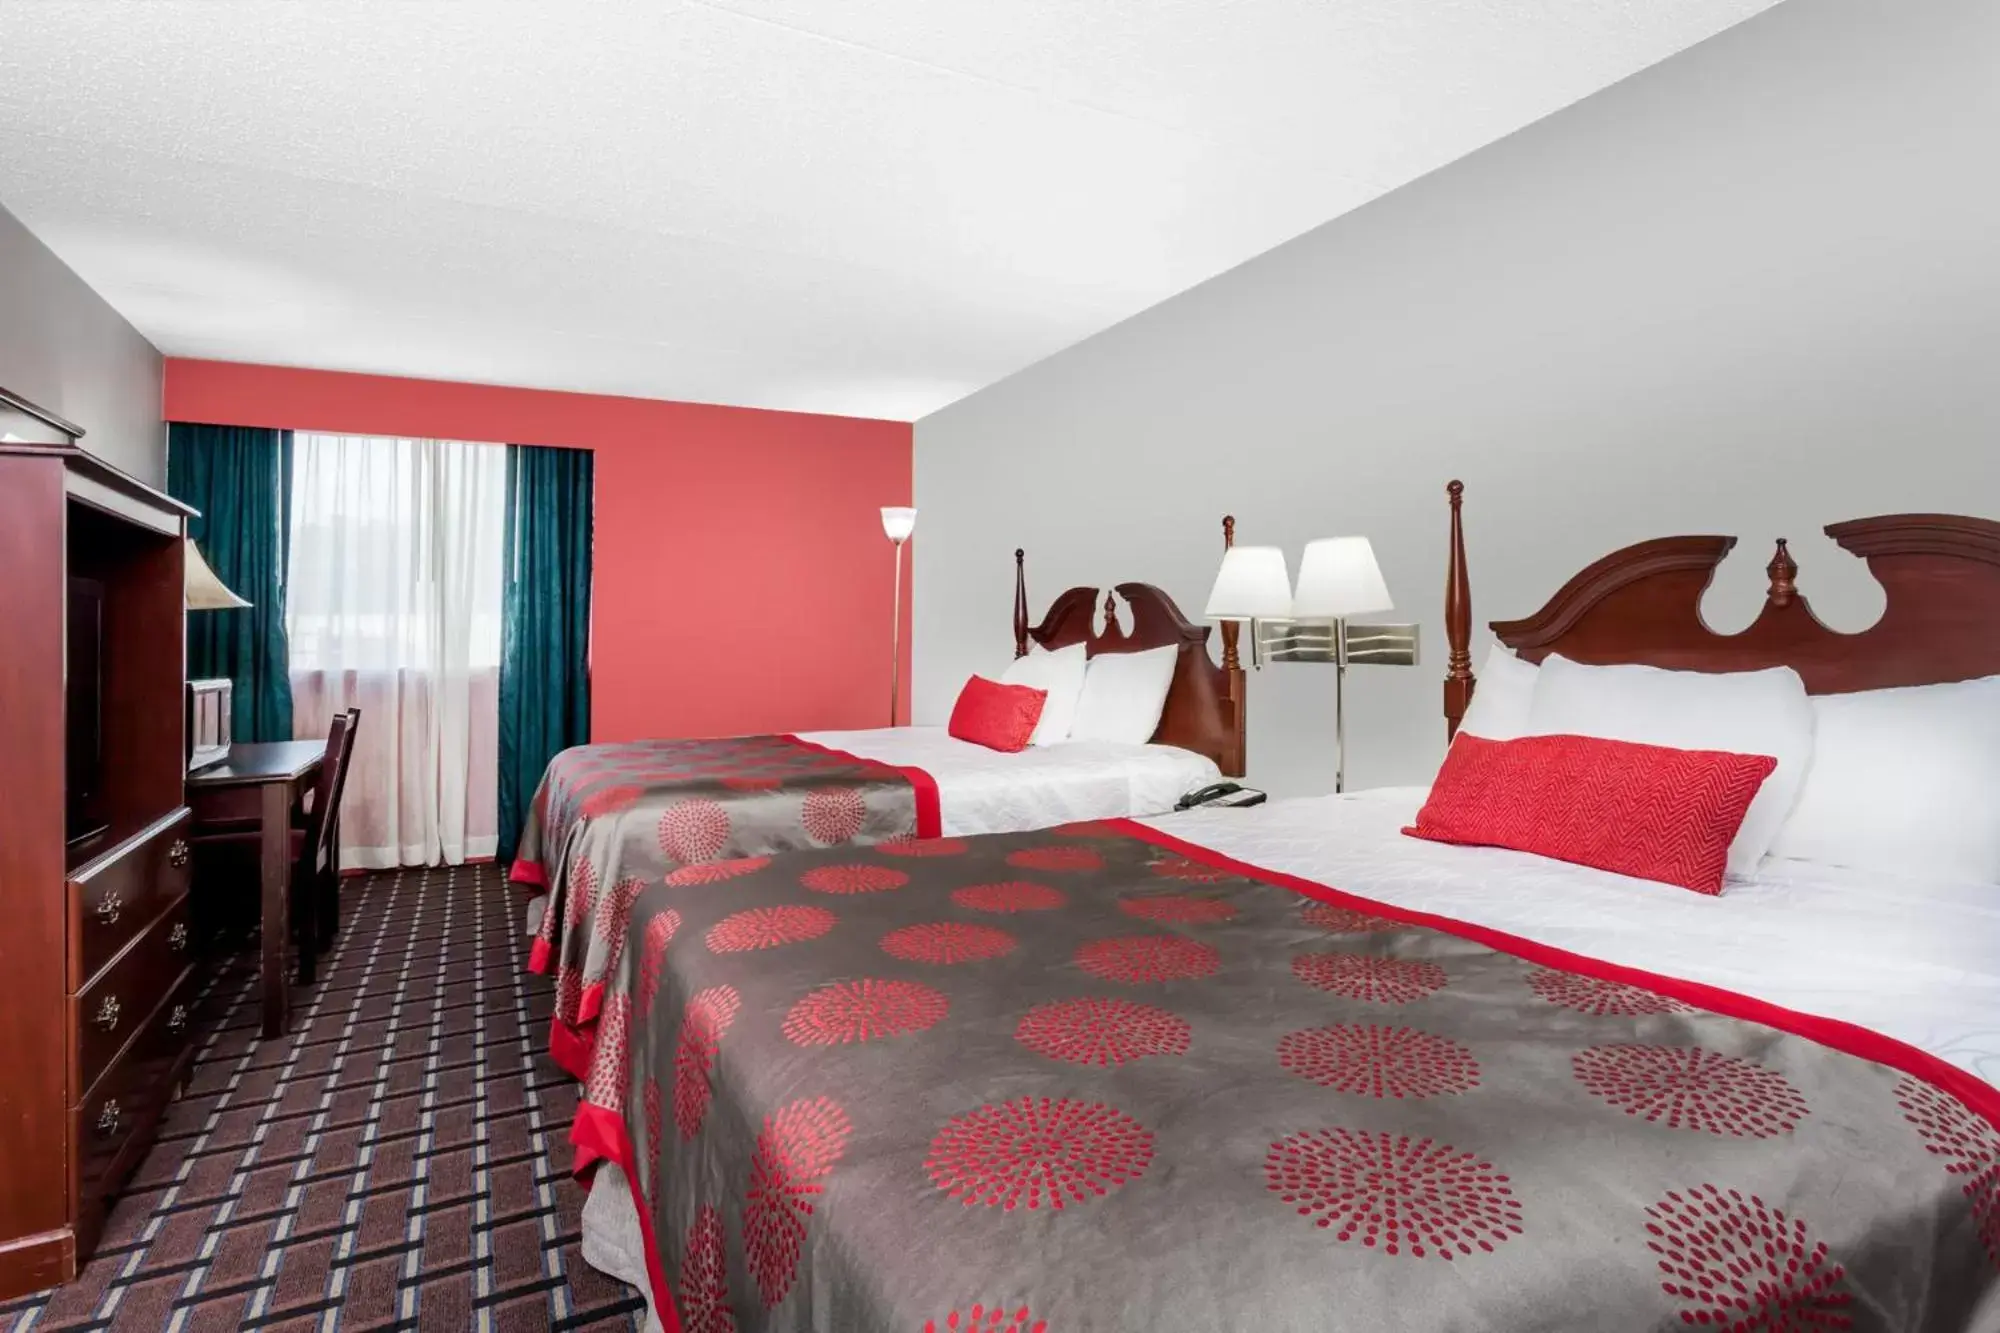 Bed, Room Photo in Ramada by Wyndham Henderson/Evansville